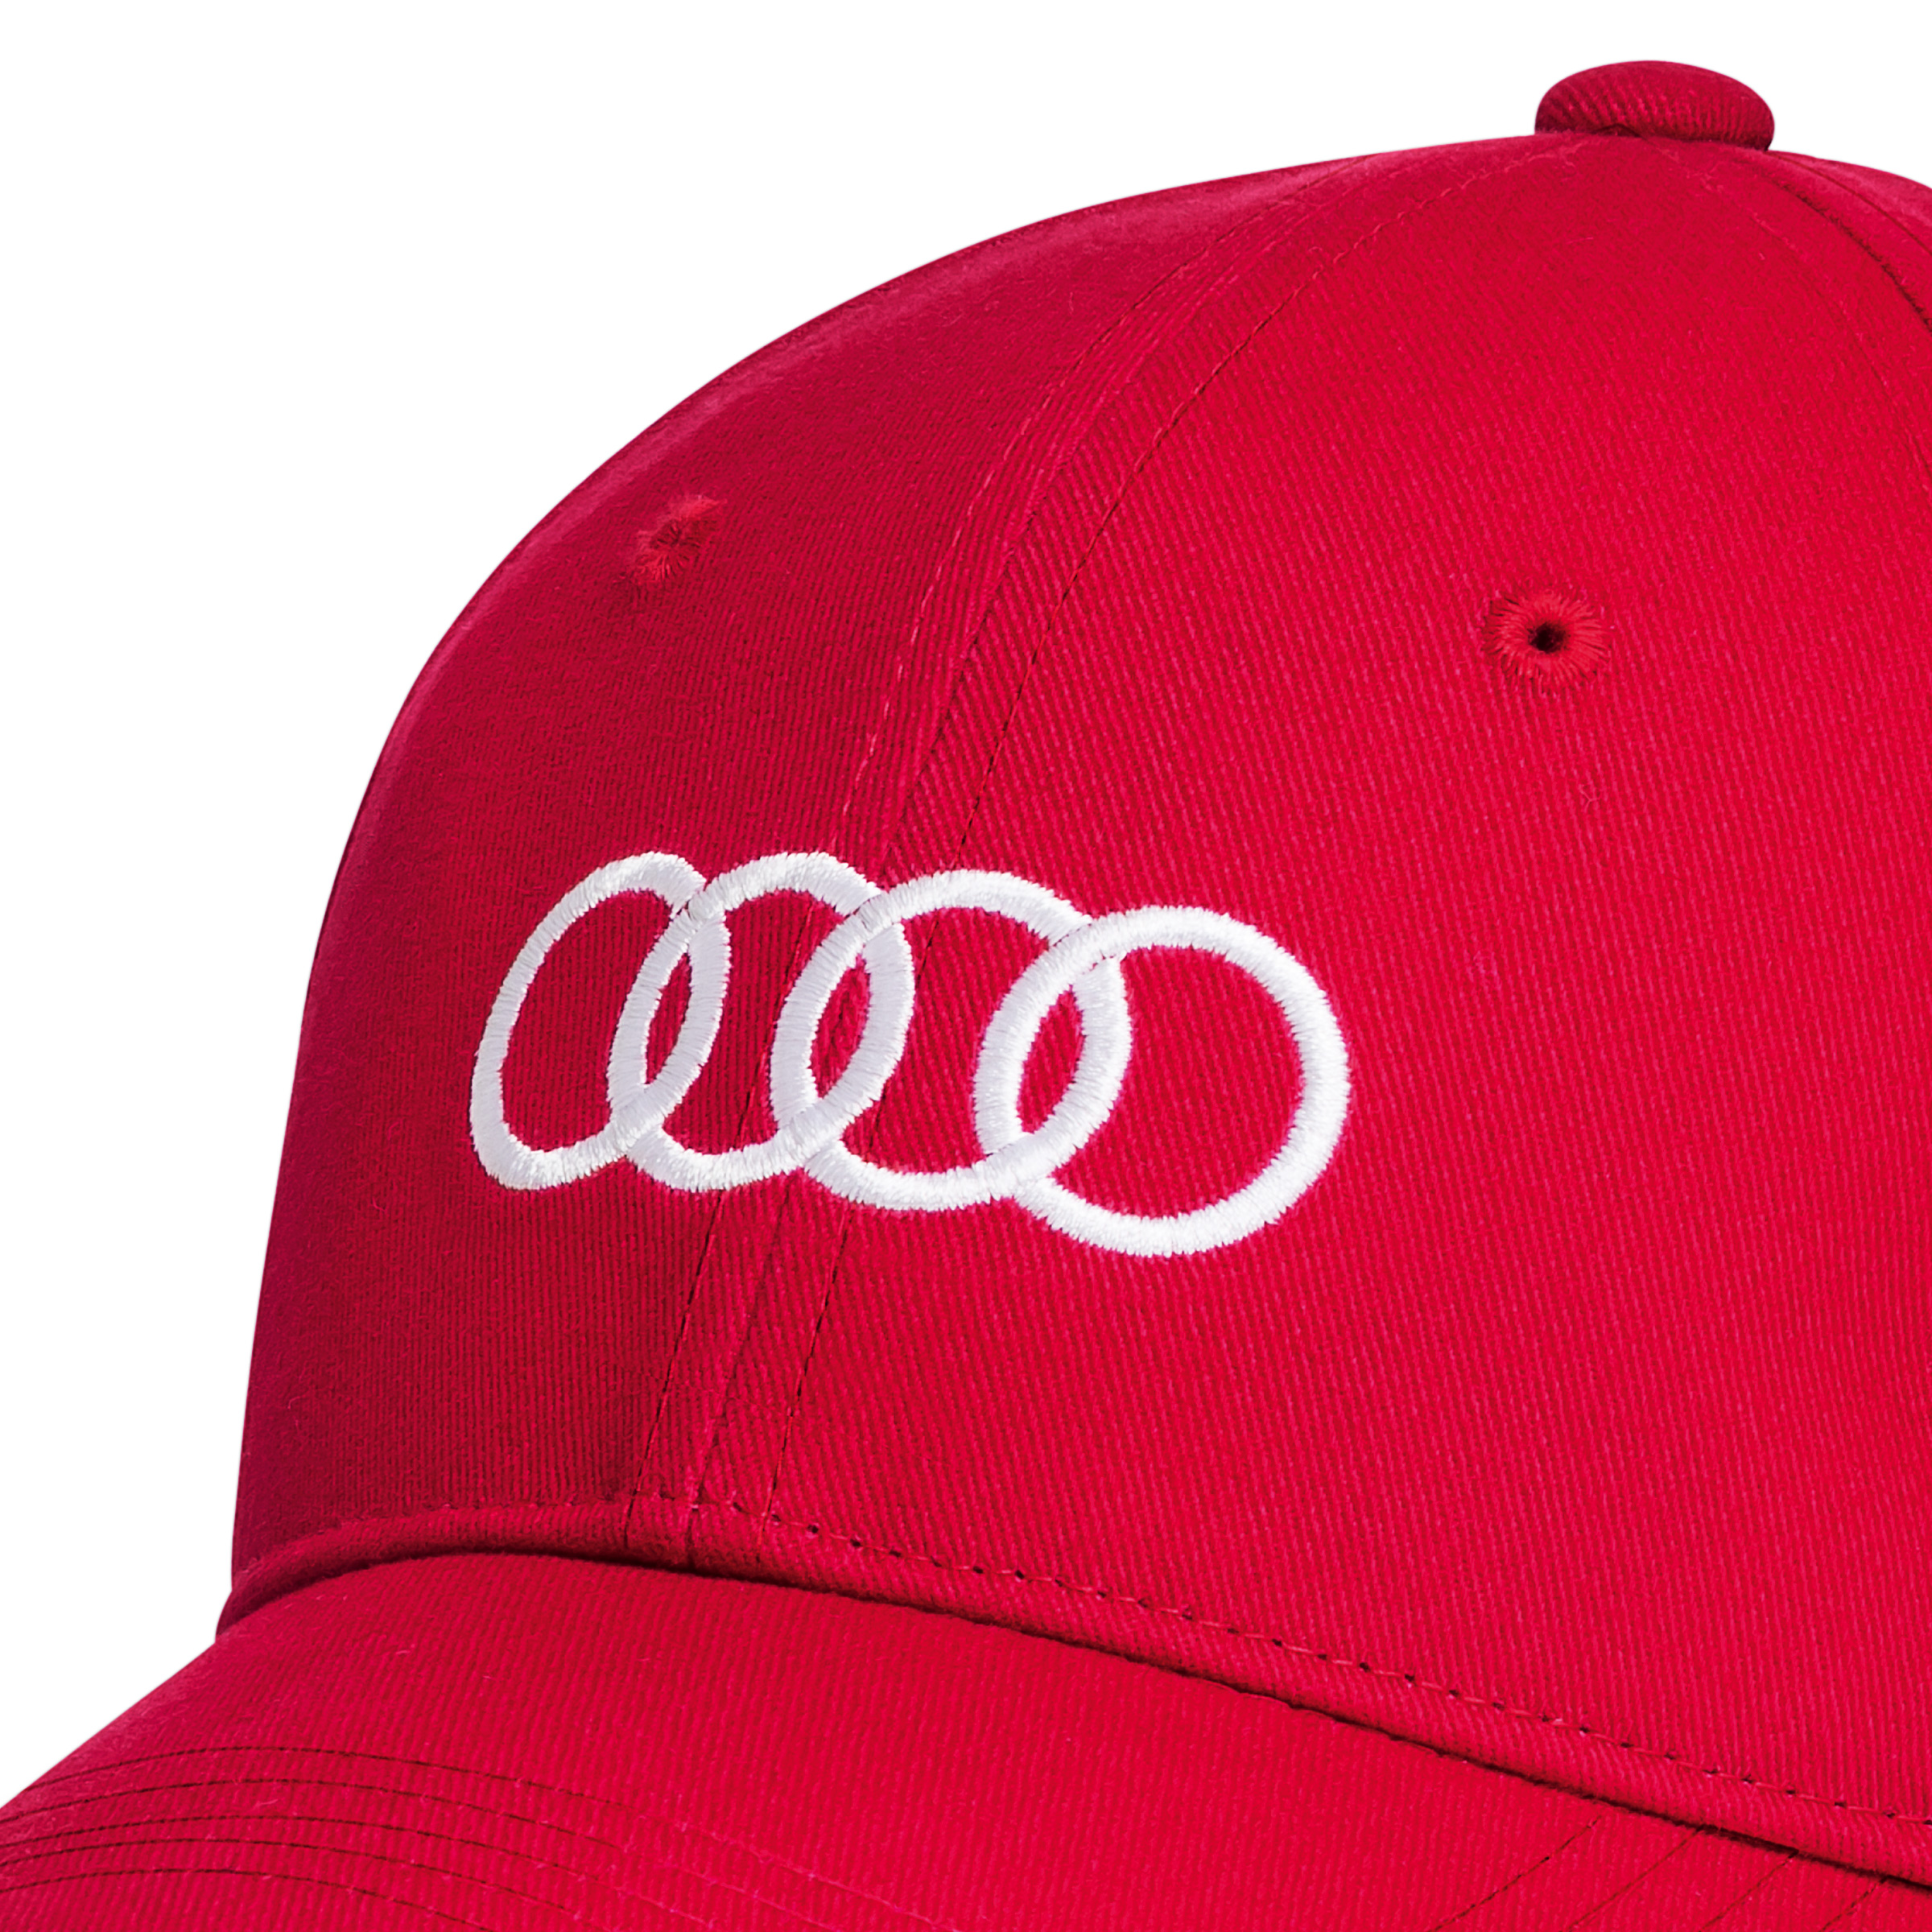 Original Audi Cap Baseballkappe Baseballcap Basecap Mütze rot 